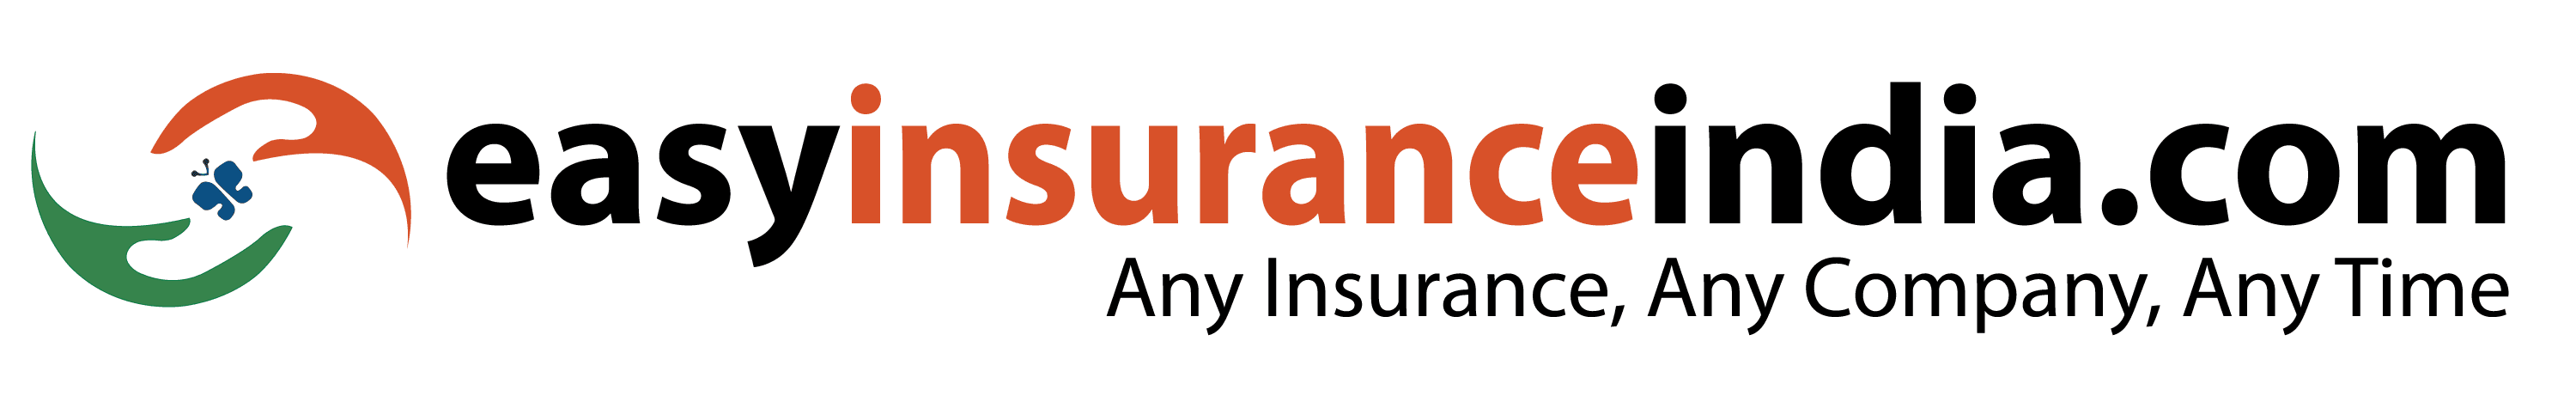 Easy Insurance India